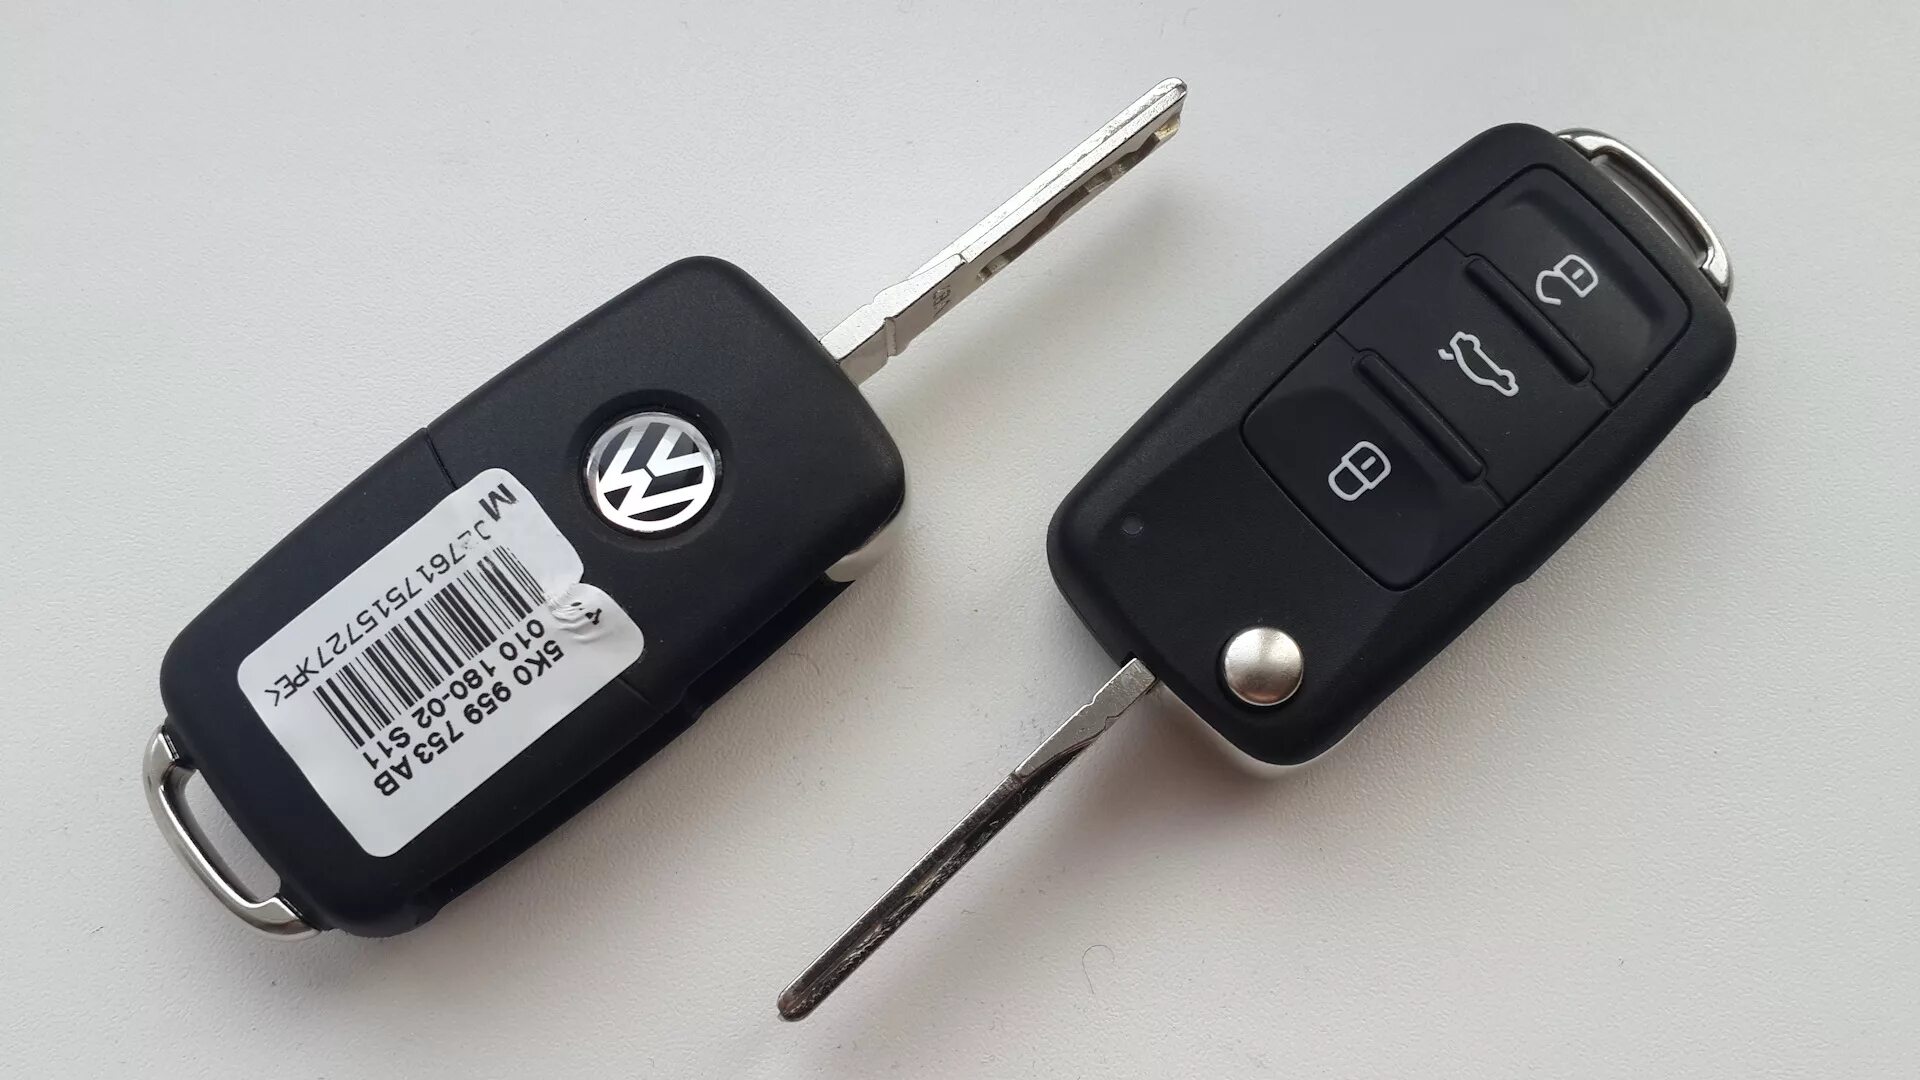 Ключи volkswagen polo. Ключи зажигания Фольксваген б5. VW Passat b6 ключ. Выкидной ключ для Фольксваген 4. Ключ Volkswagen Passat b5.